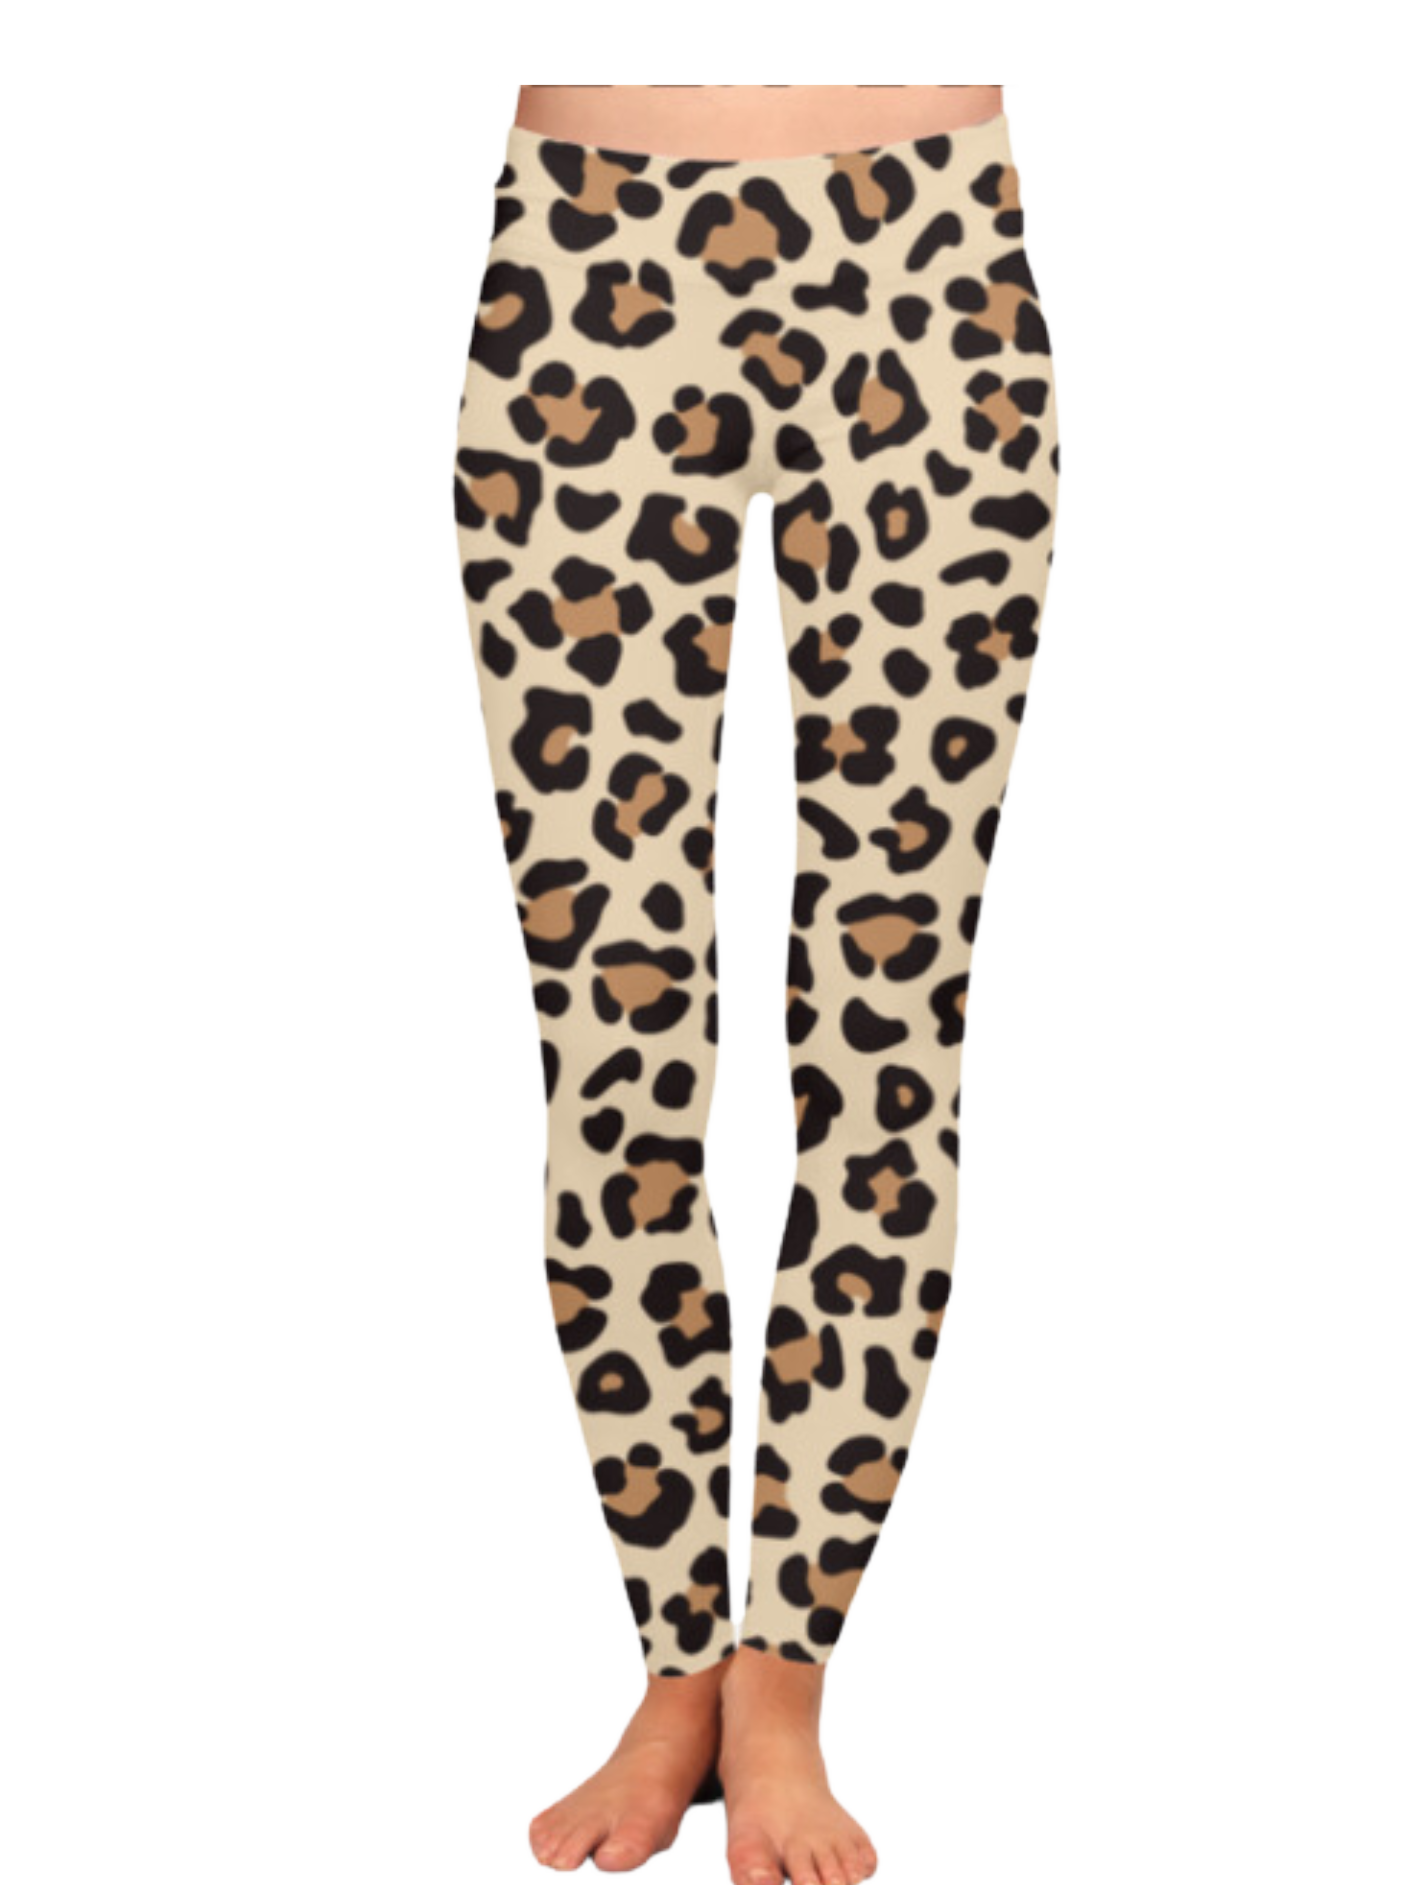 Chic Leopard Print High Waist Body Shaping Brown Leggings